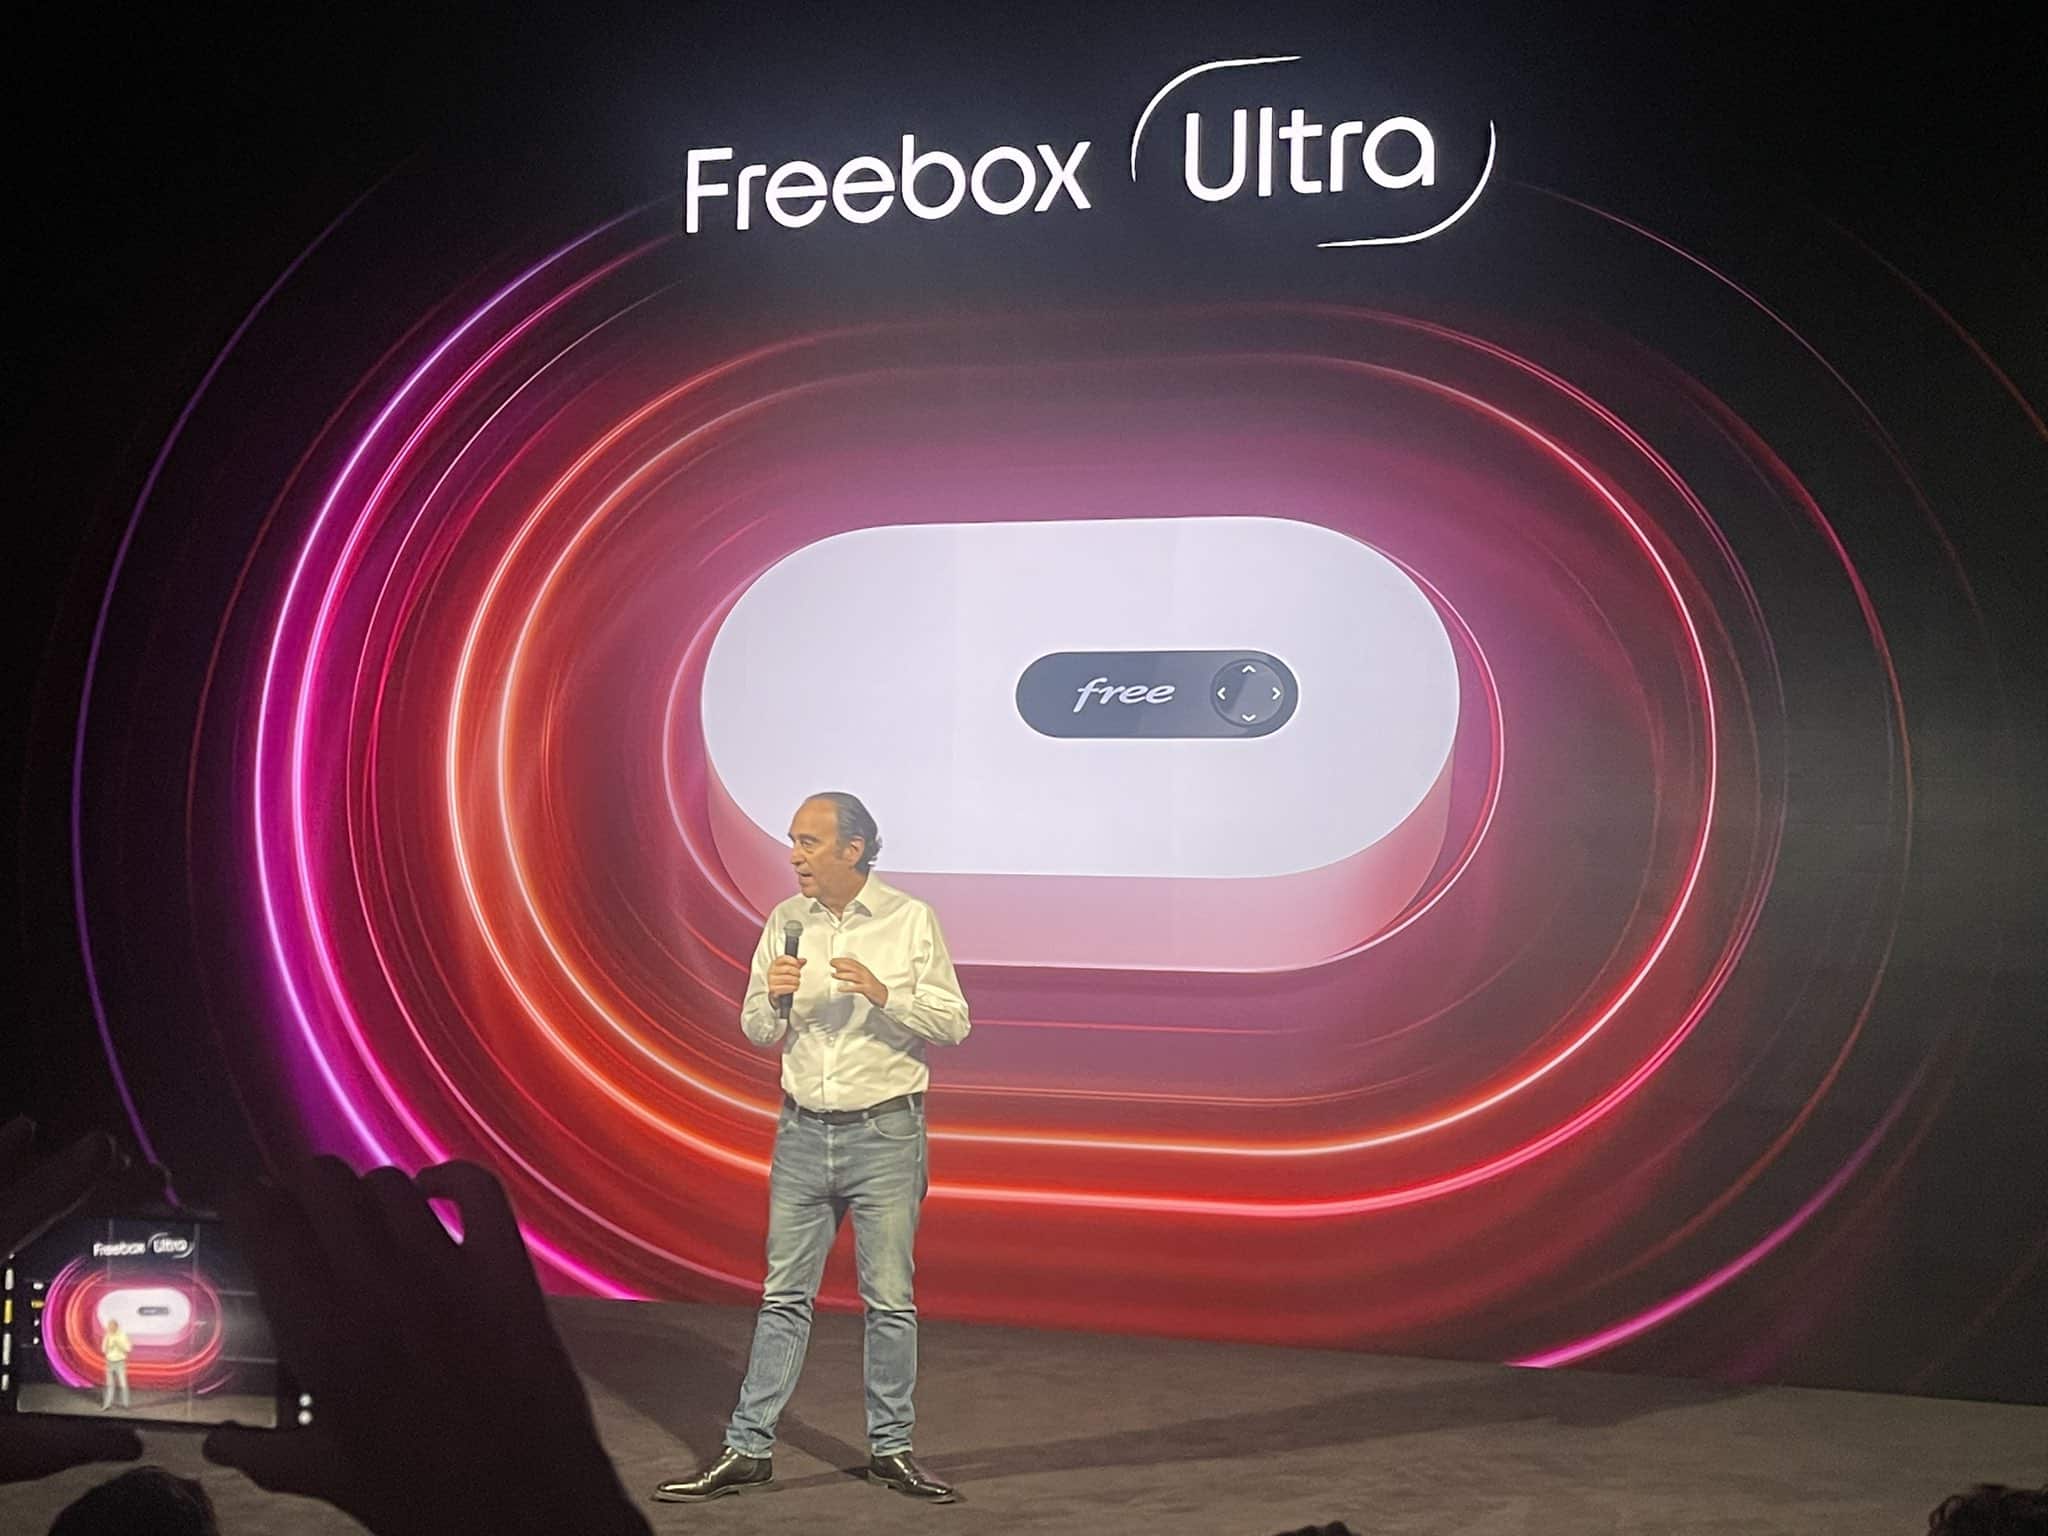 Freebox Ultra